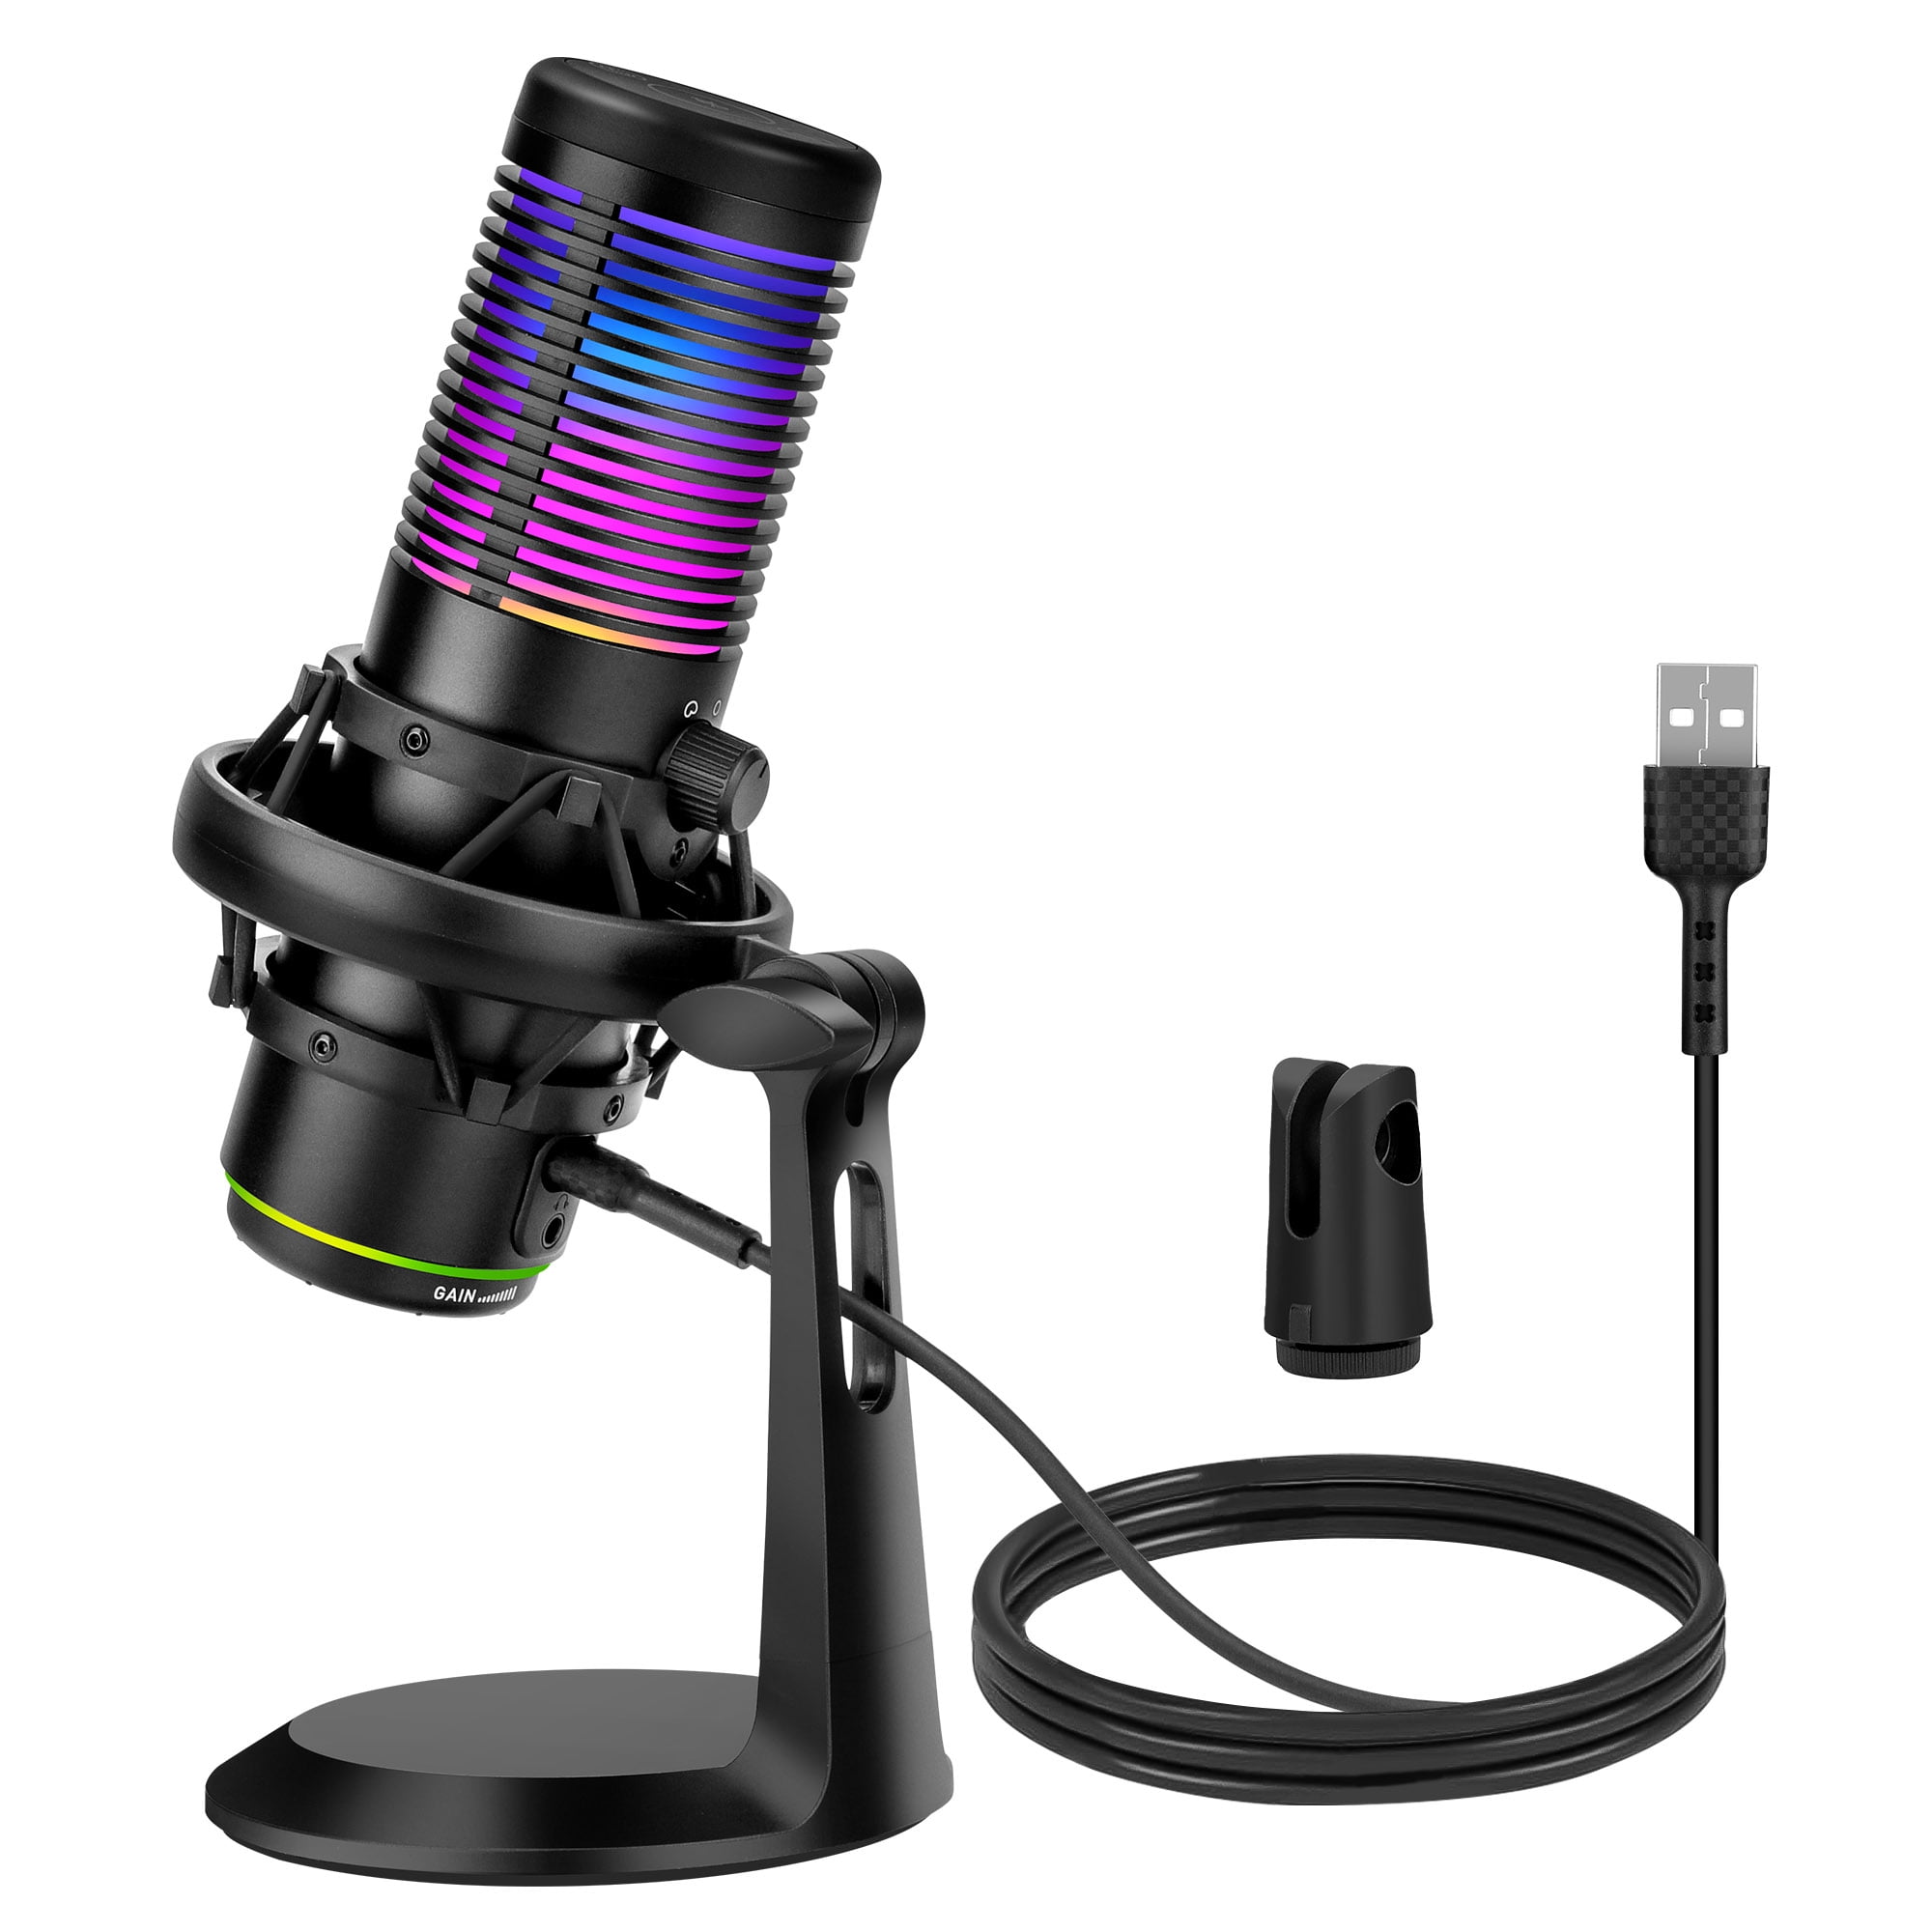 UM700 | Desktop USB Microphone with Adjustable Polar Patterns | Movo